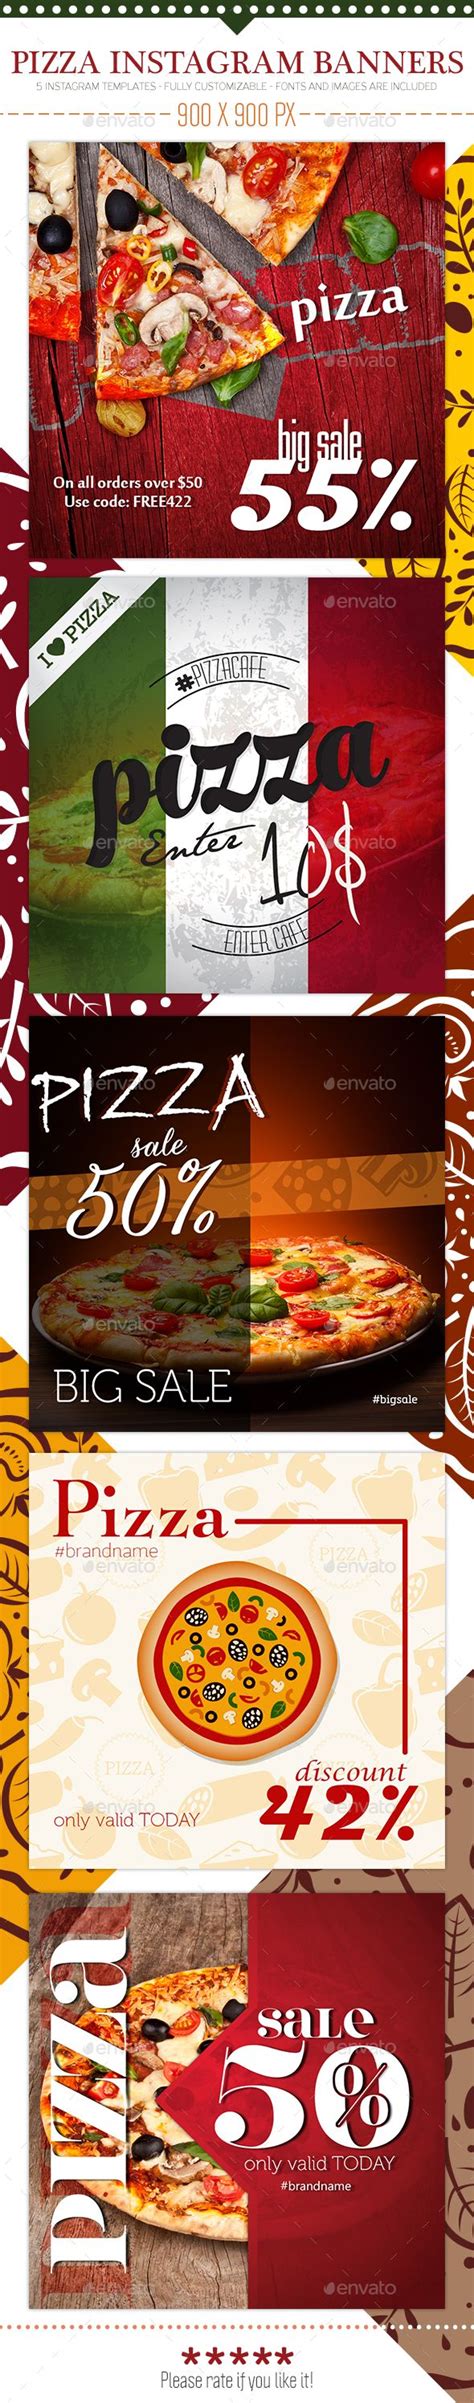 Pizza Instagram Promotional Templates Healthy Instagram Instagram